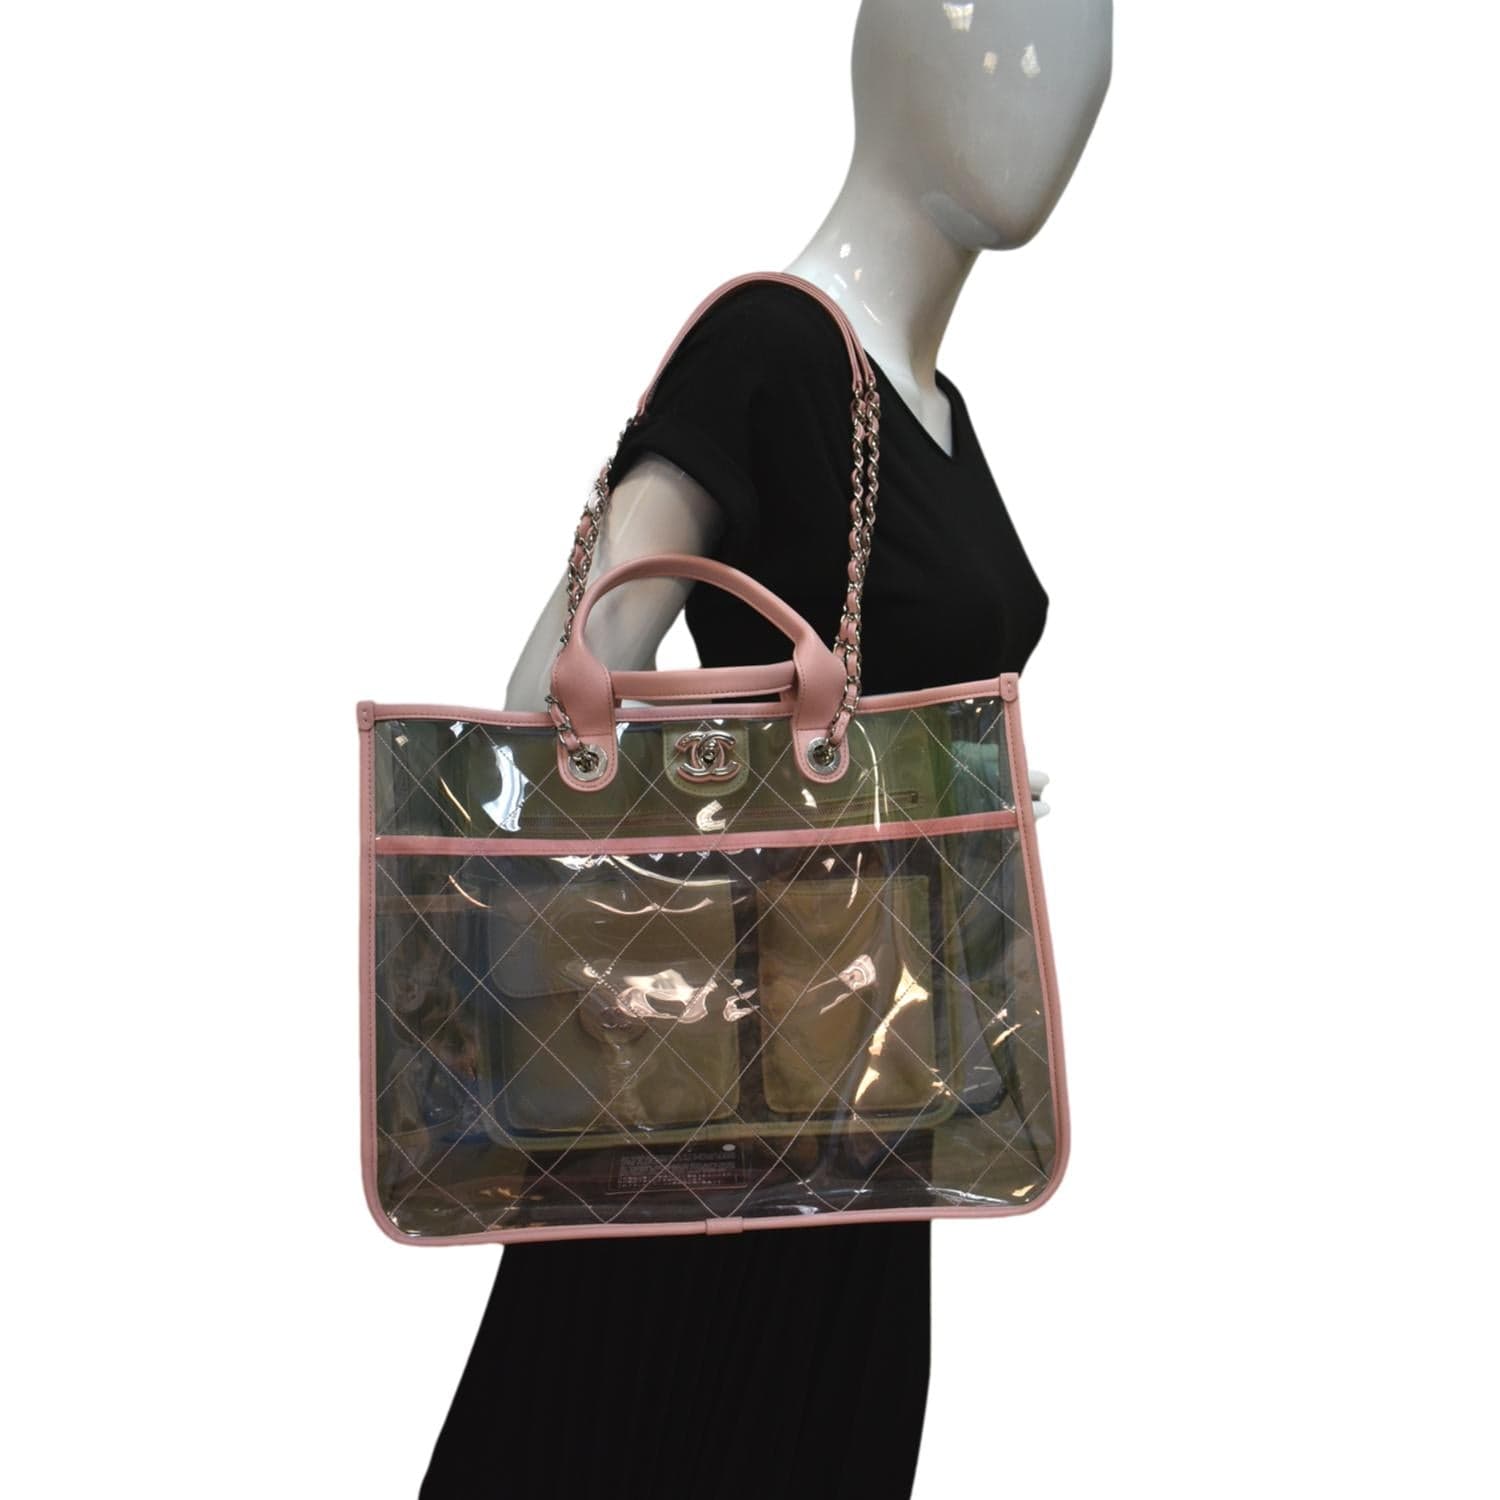 CHANEL Coco Mark PVC Vinyl Bag Shoulder Bag Tote Bag W/Pouch Pink/Clear